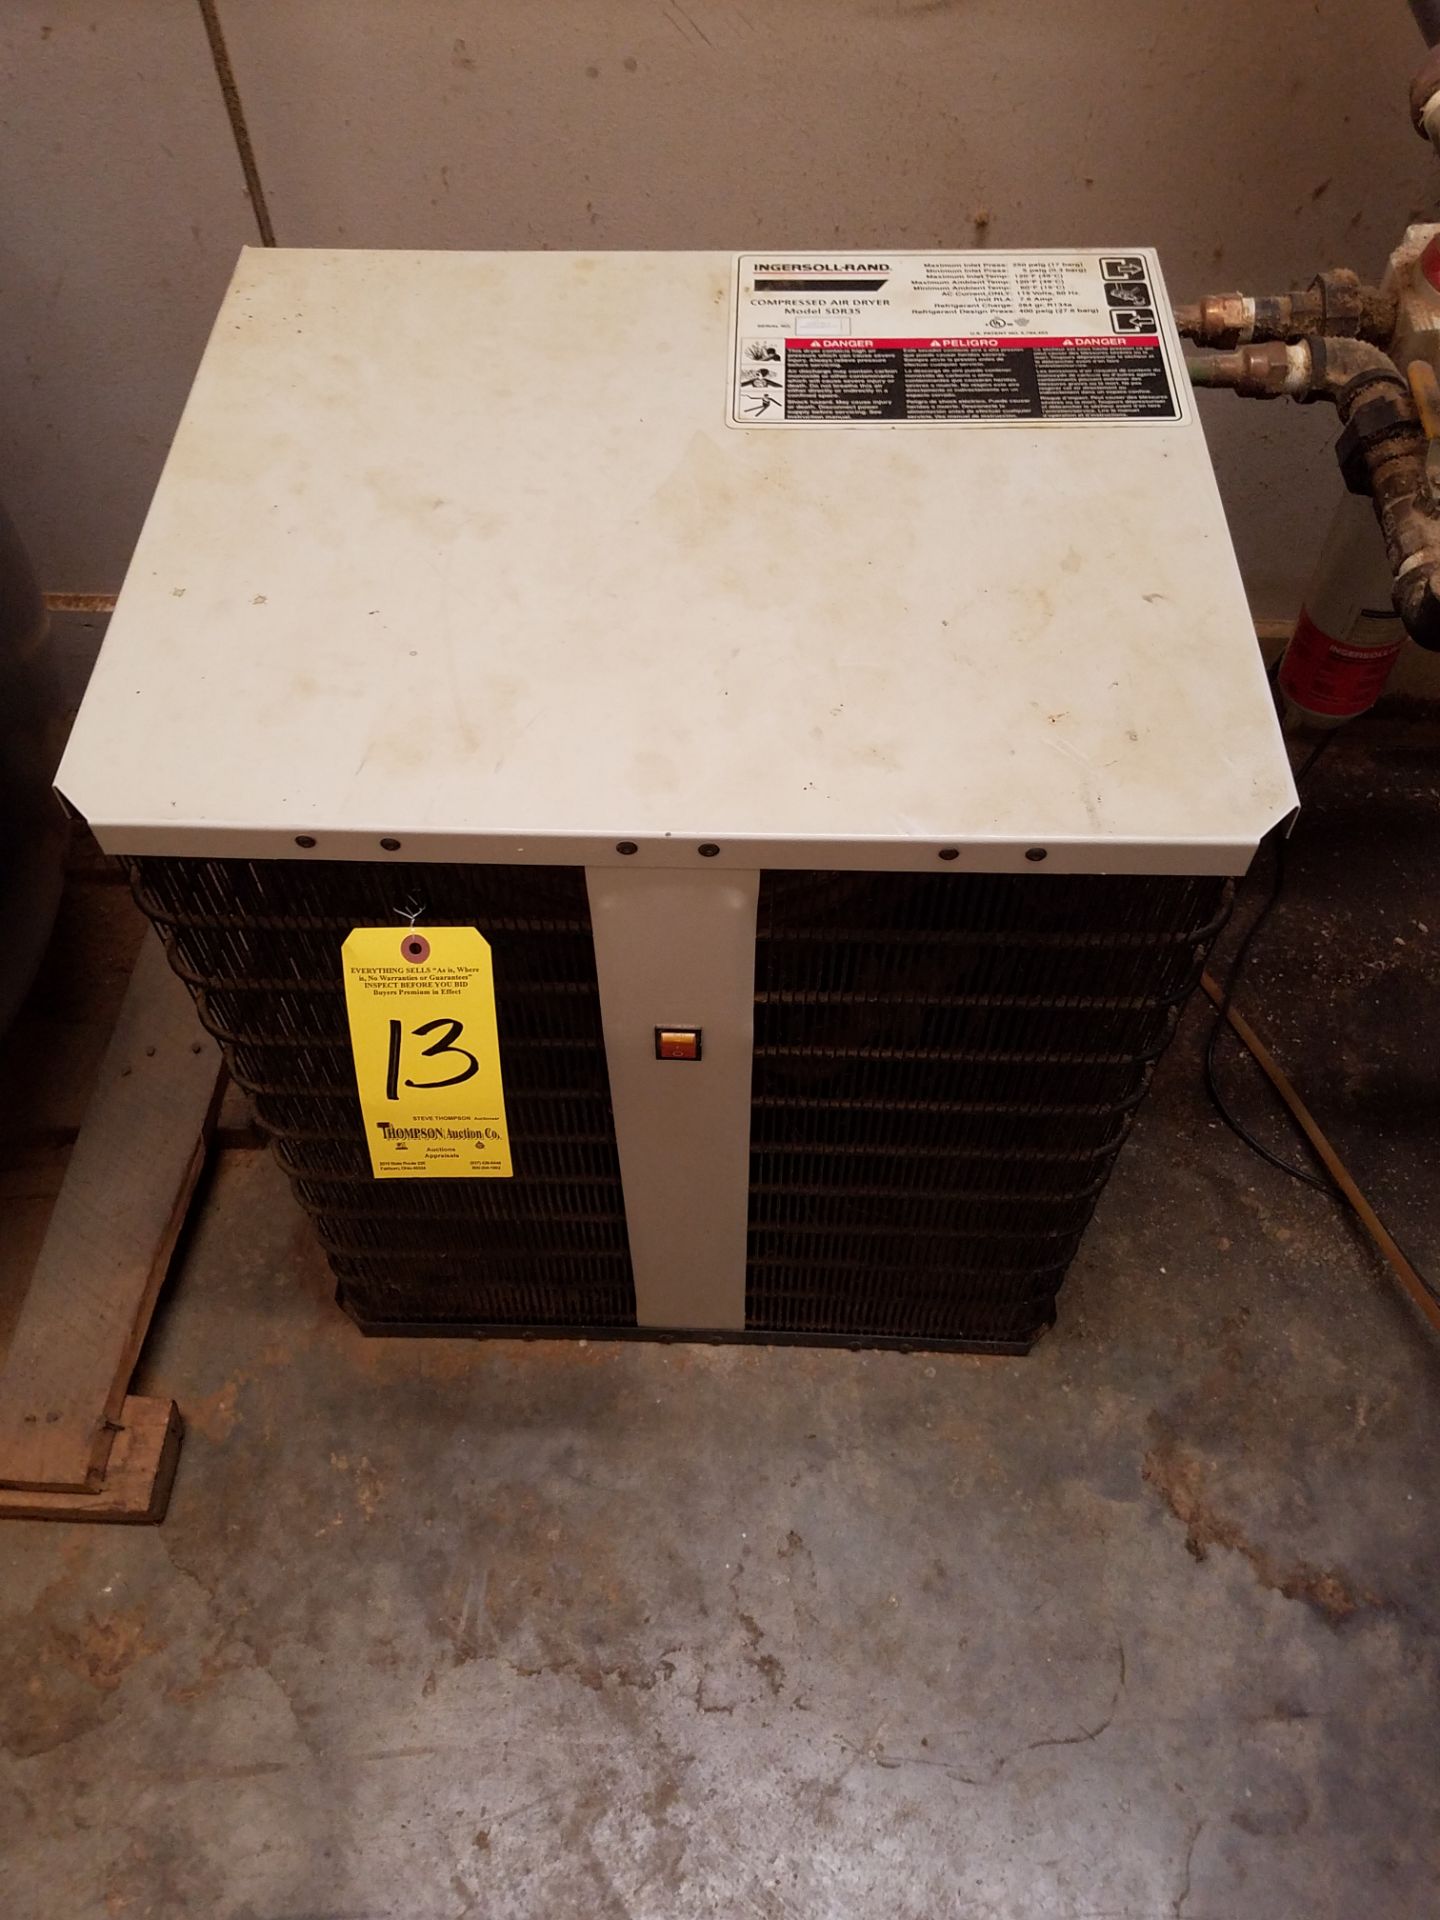 Ingersoll Rand Compressed Air Dryer, Model SD R 35, s/n 00HSDRA3416, $100 Loading Fee